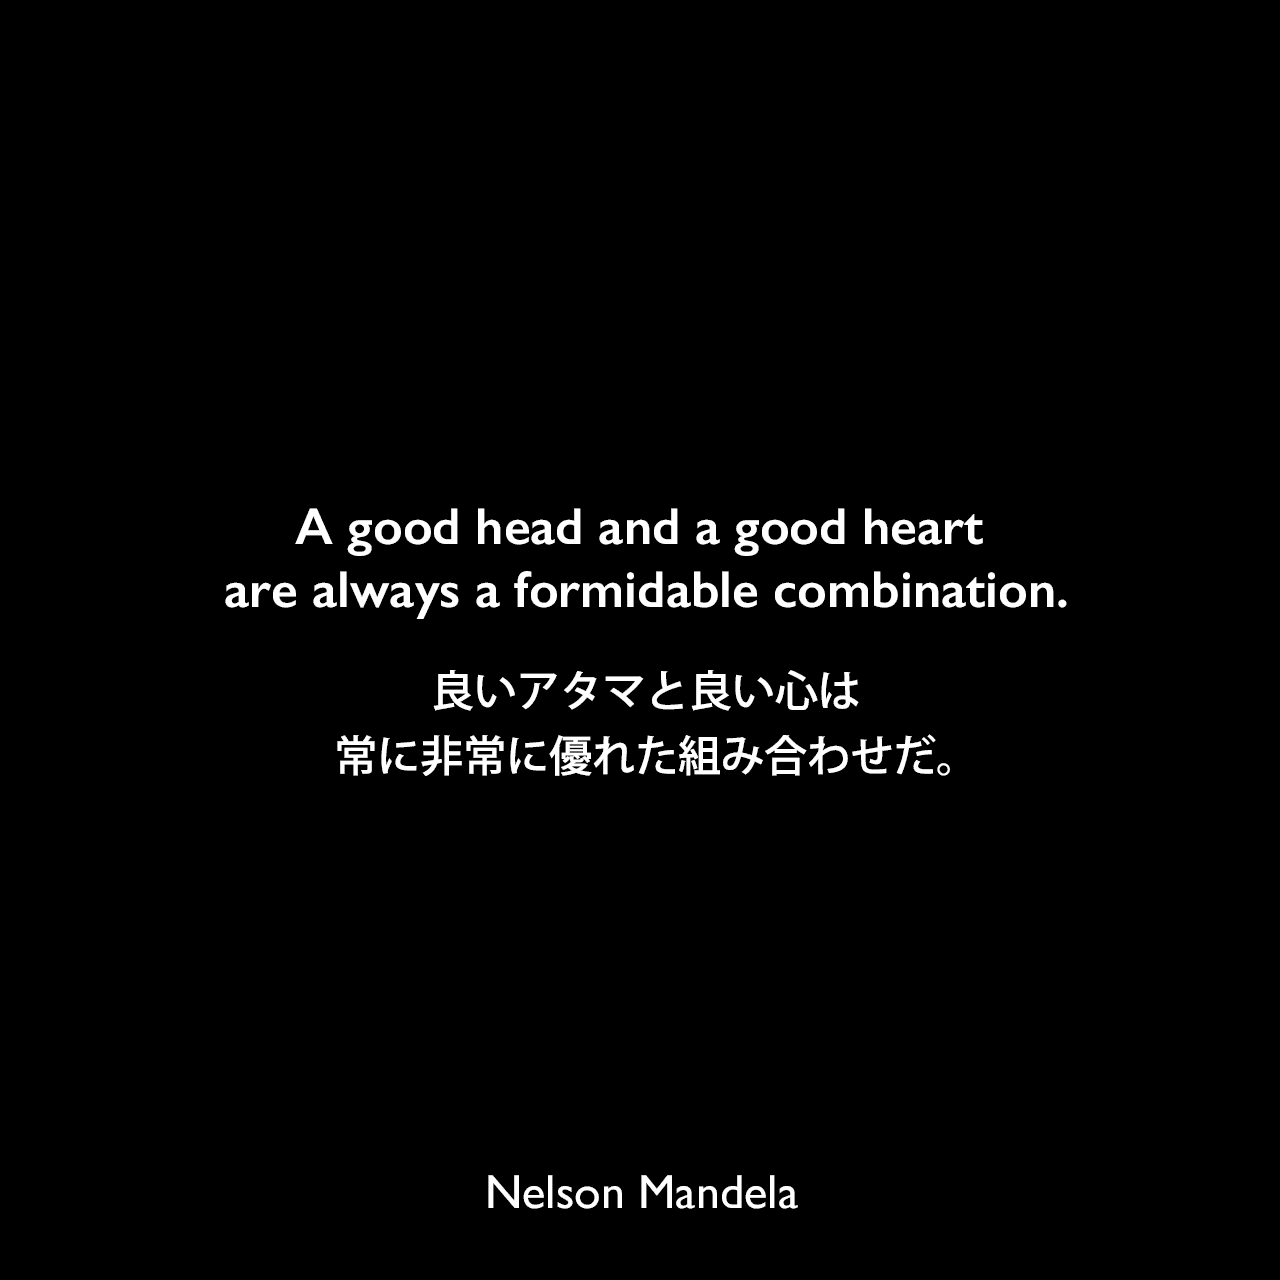 A good head and a good heart are always a formidable combination.良いアタマと良い心は、常に非常に優れた組み合わせだ。- ネルソン・マンデラによる本「自由への長い道 ネルソン・マンデラ自伝」よりNelson Mandela